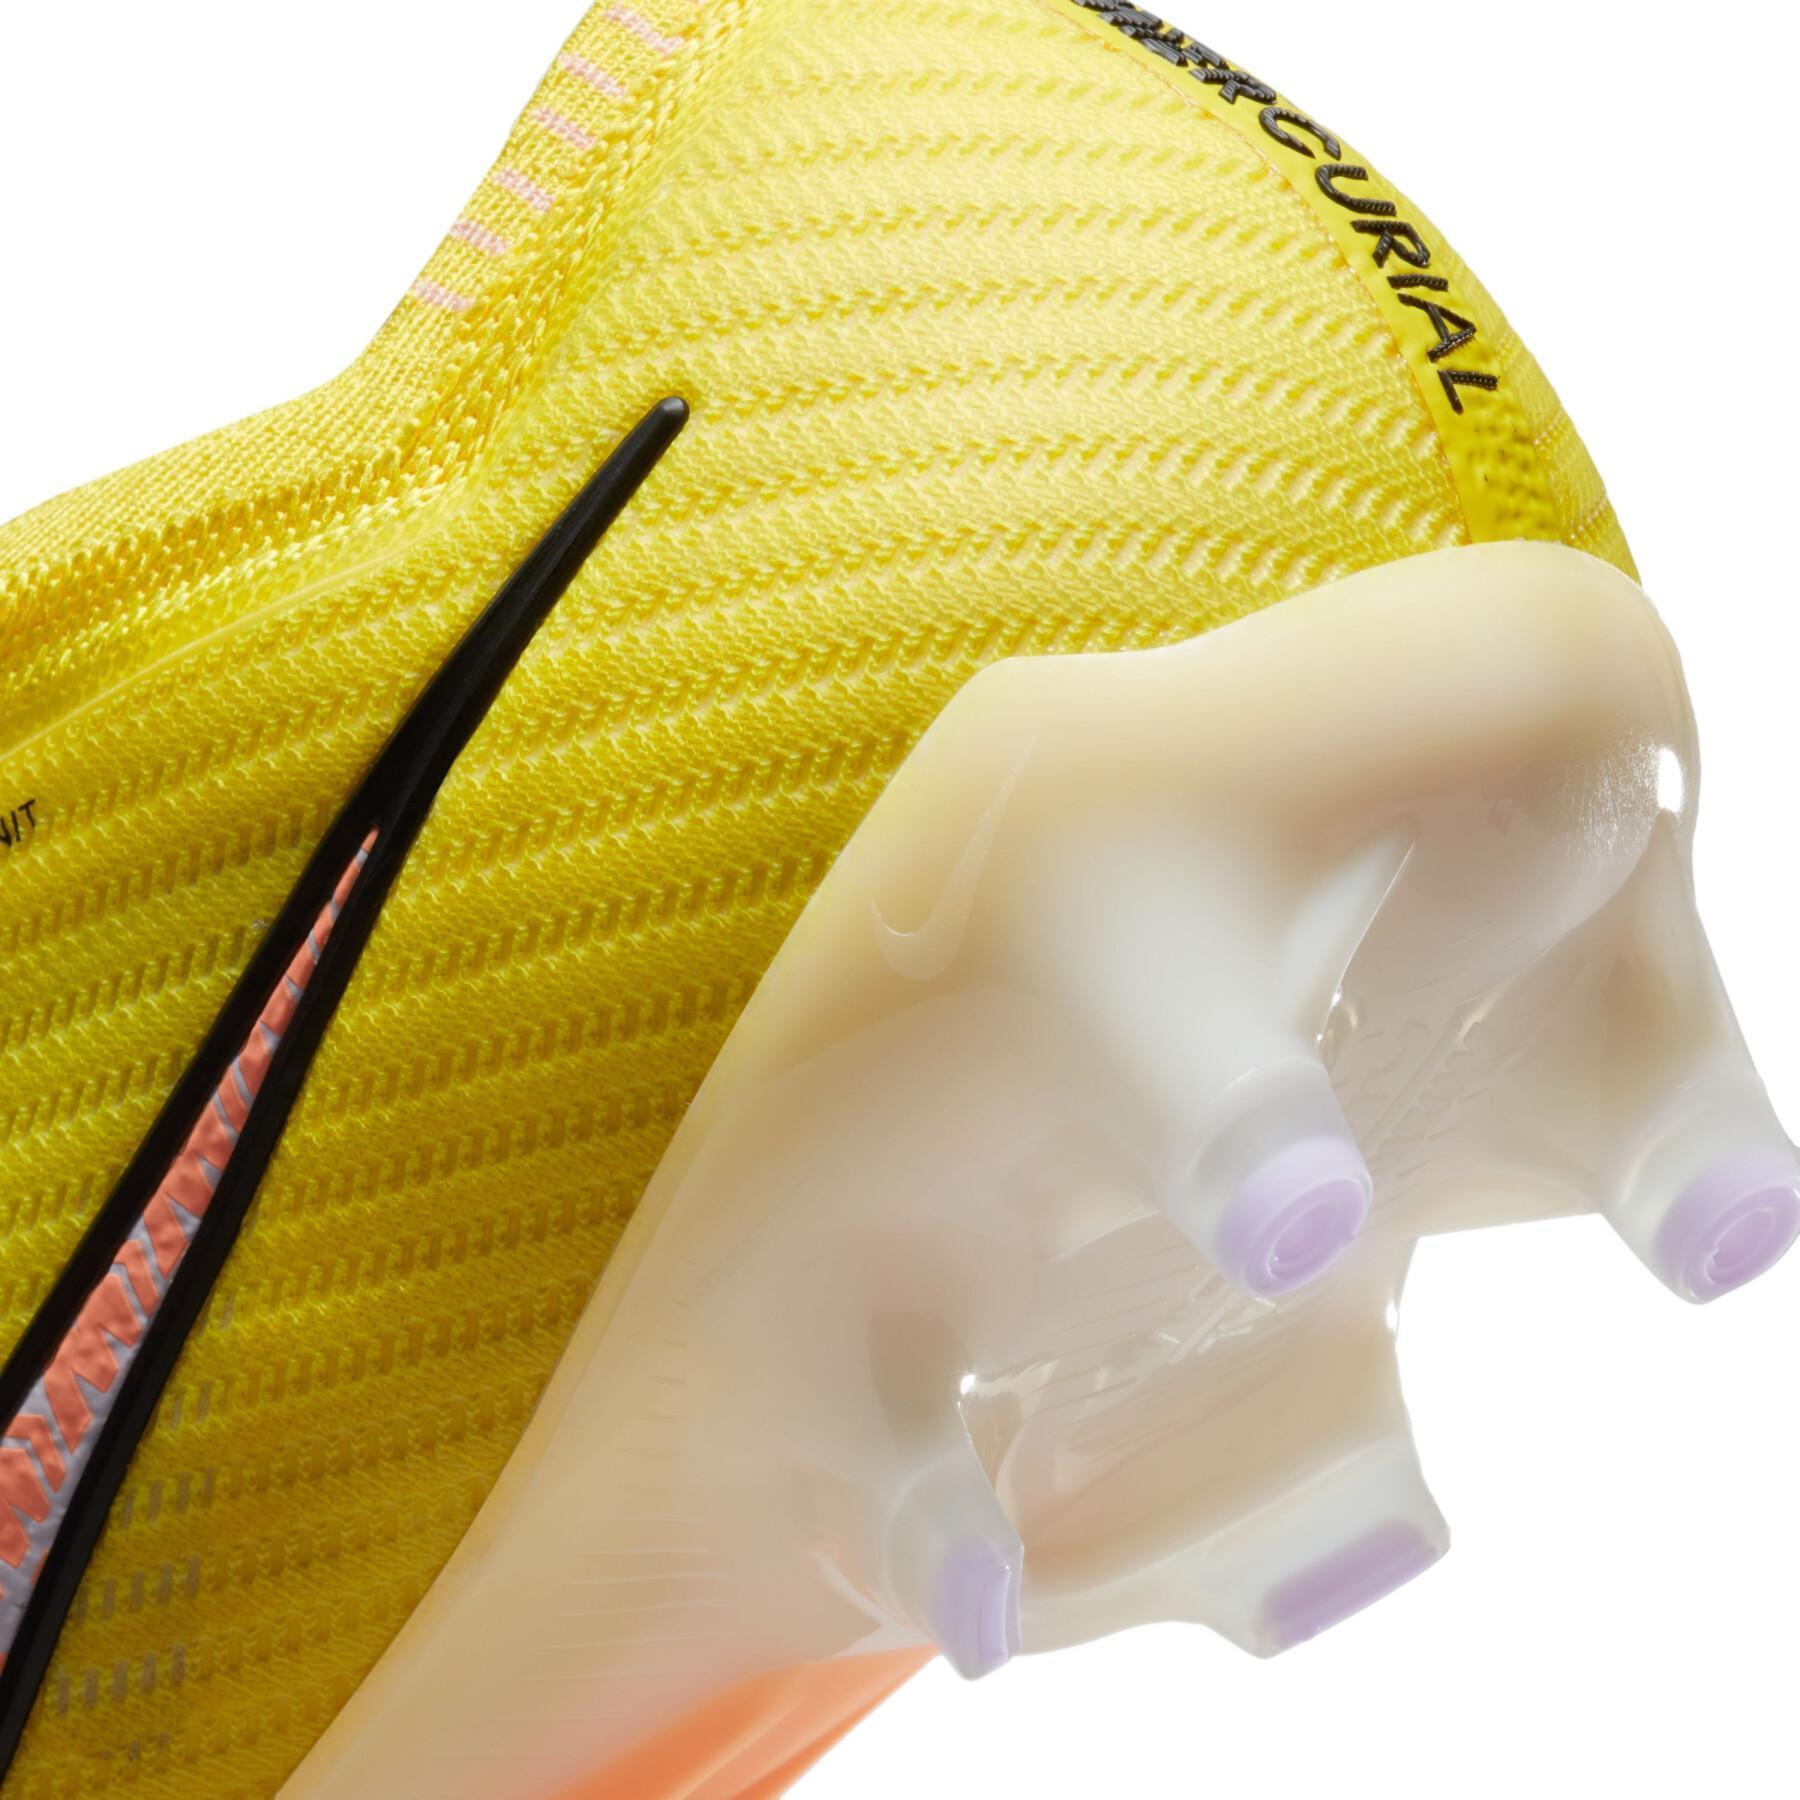 Buty piłkarskie Nike Zoom Mercurial Vapor 15 Elite AG-Pro - Lucent Pack